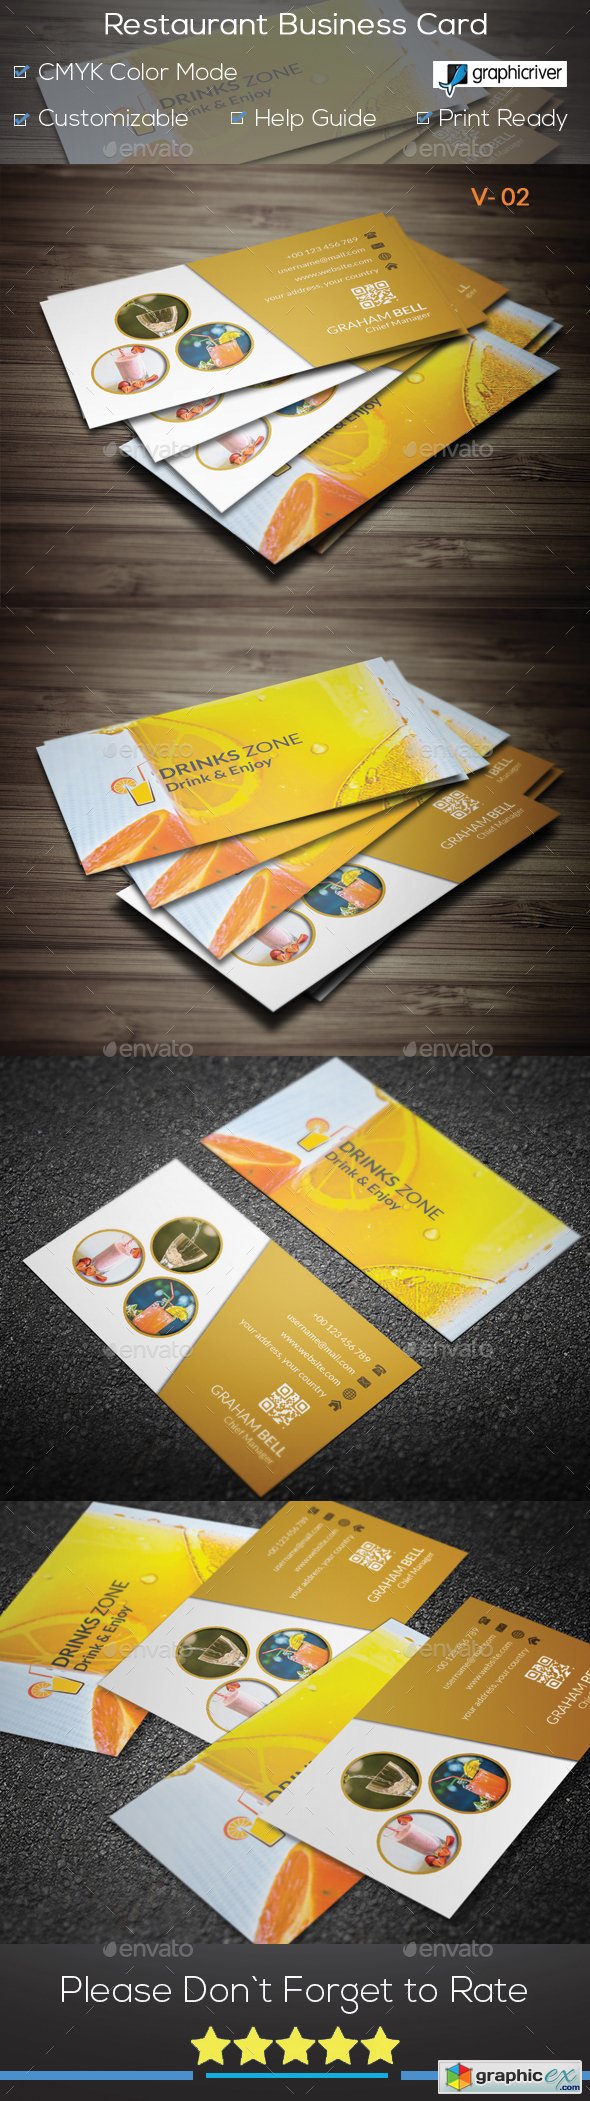 Restaurant Business Card V 02